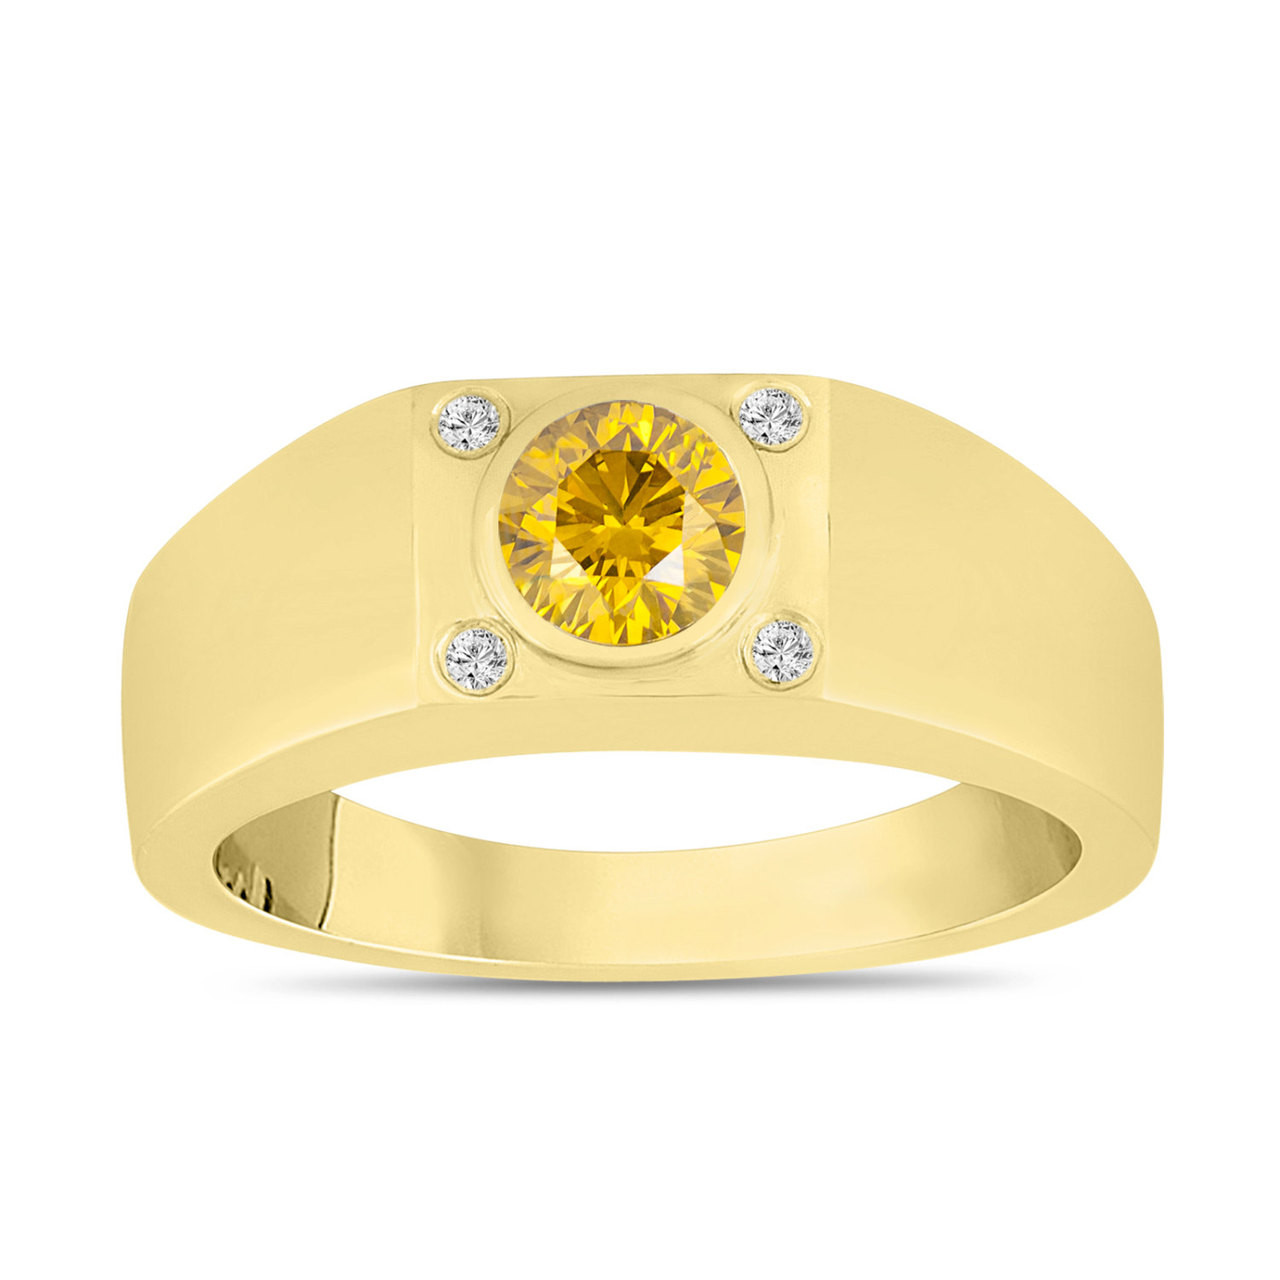 Fancy Yellow Diamond Solitaire Mens Ring 14K Yellow Gold 0.55 Carat ...